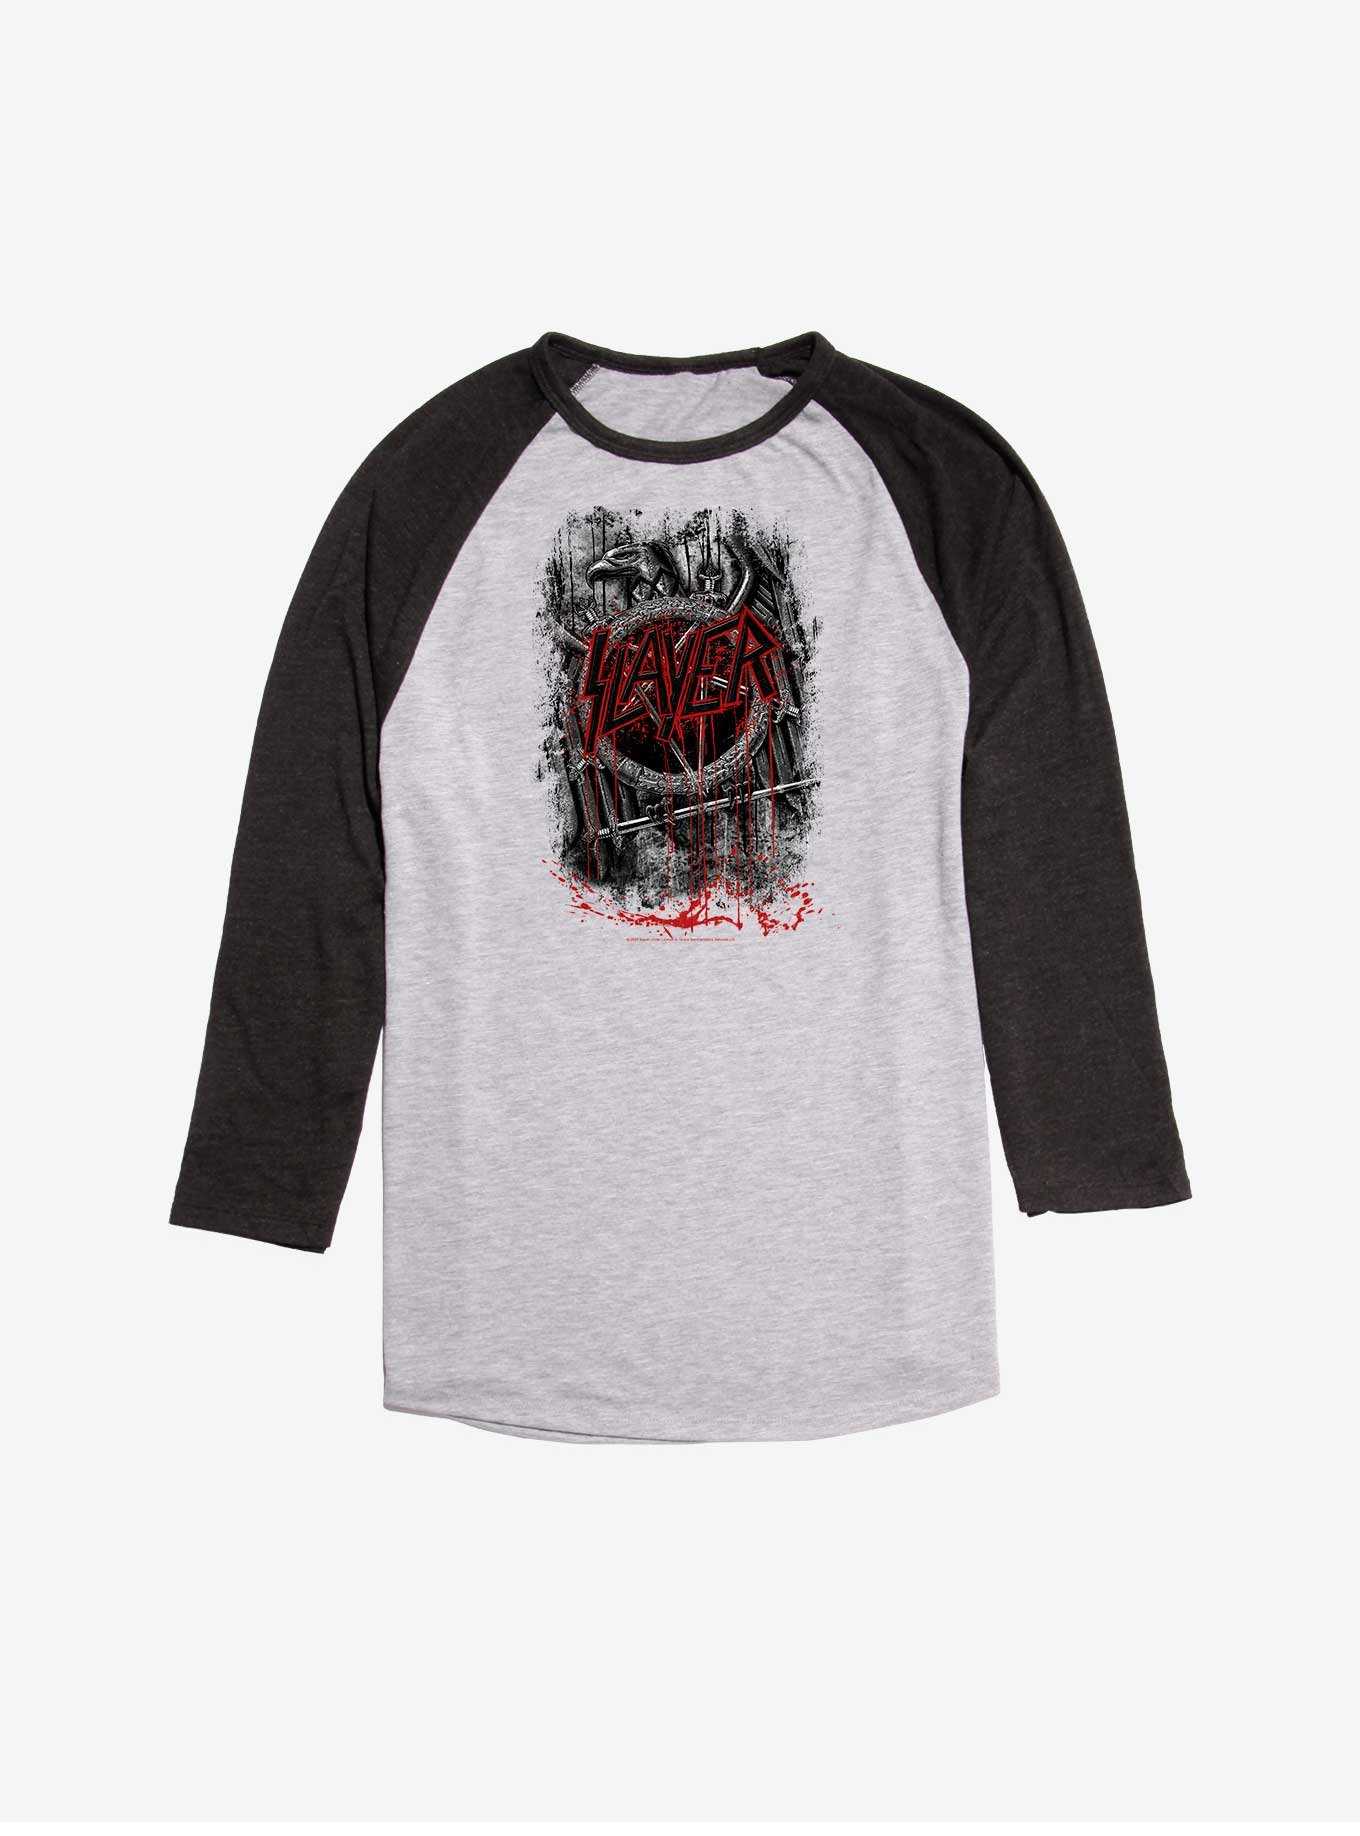 Slayer Dripping Blood Iron Eagle Raglan T-Shirt, , hi-res